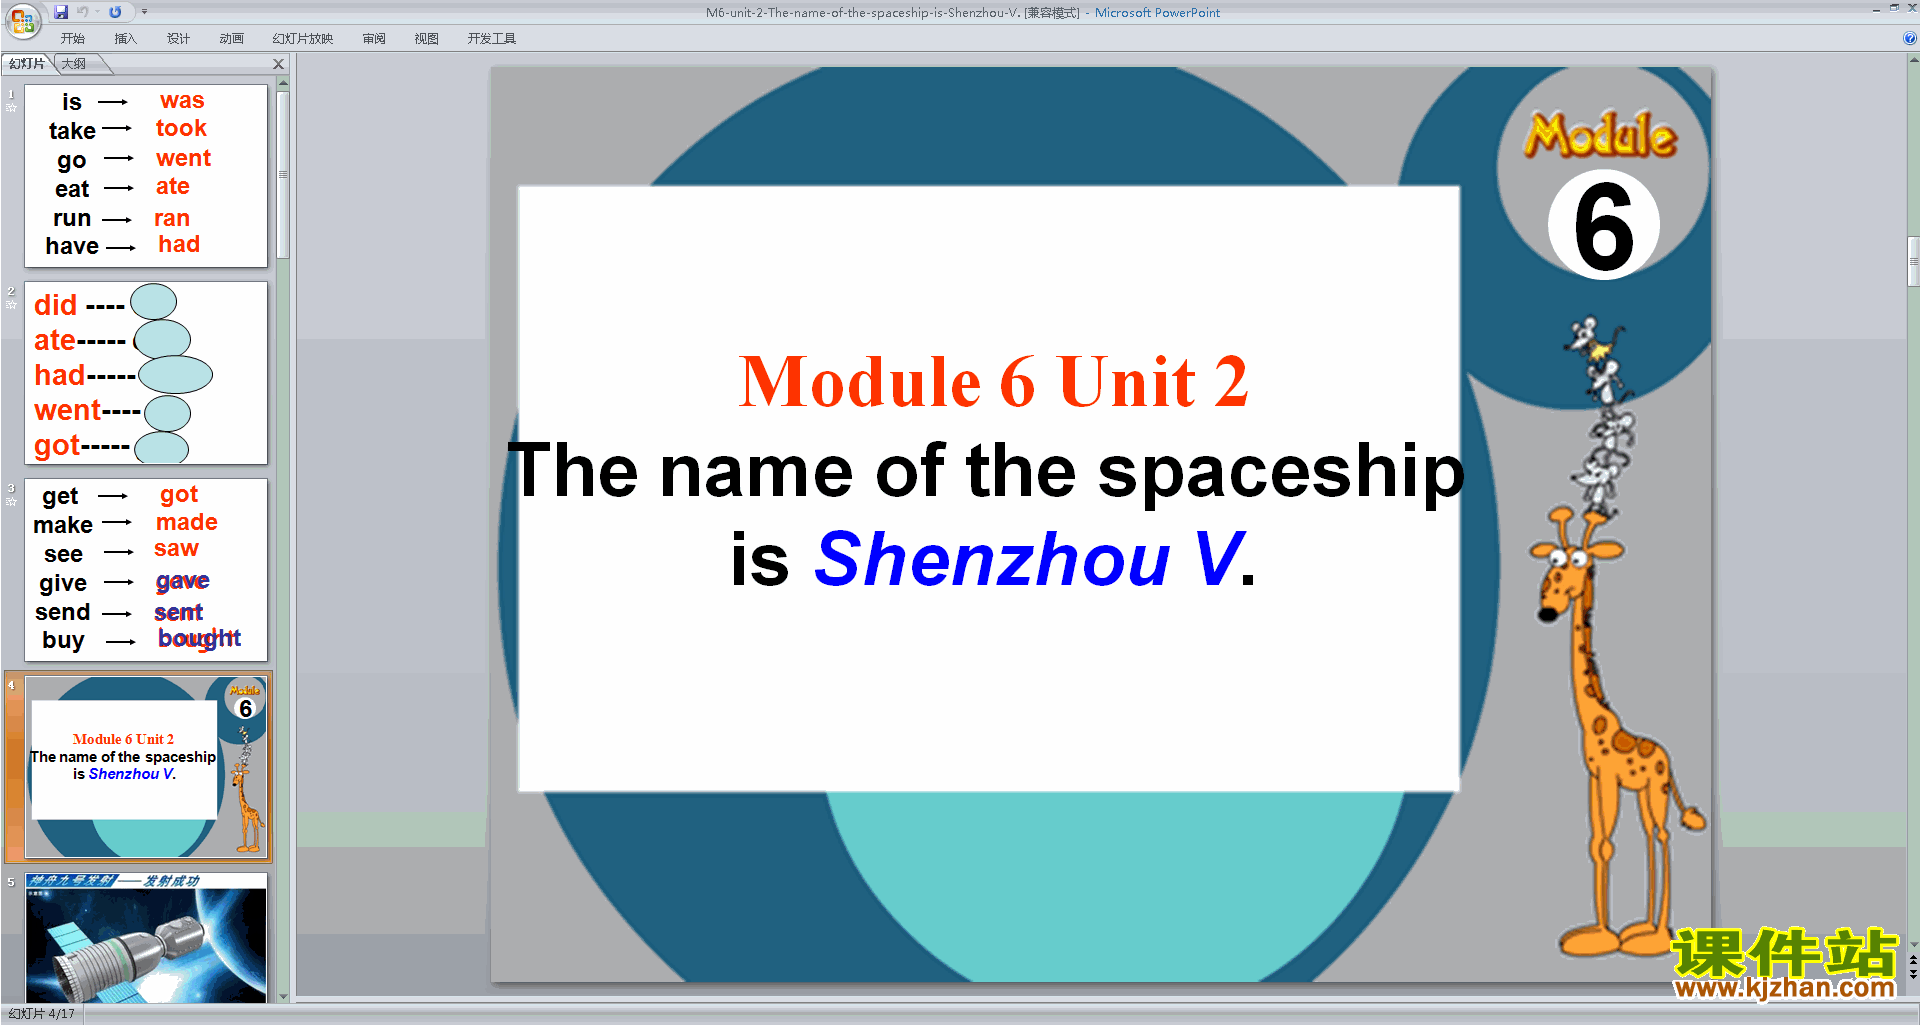 ʿThe name of the spaceship is Shenzhou VPPTμ